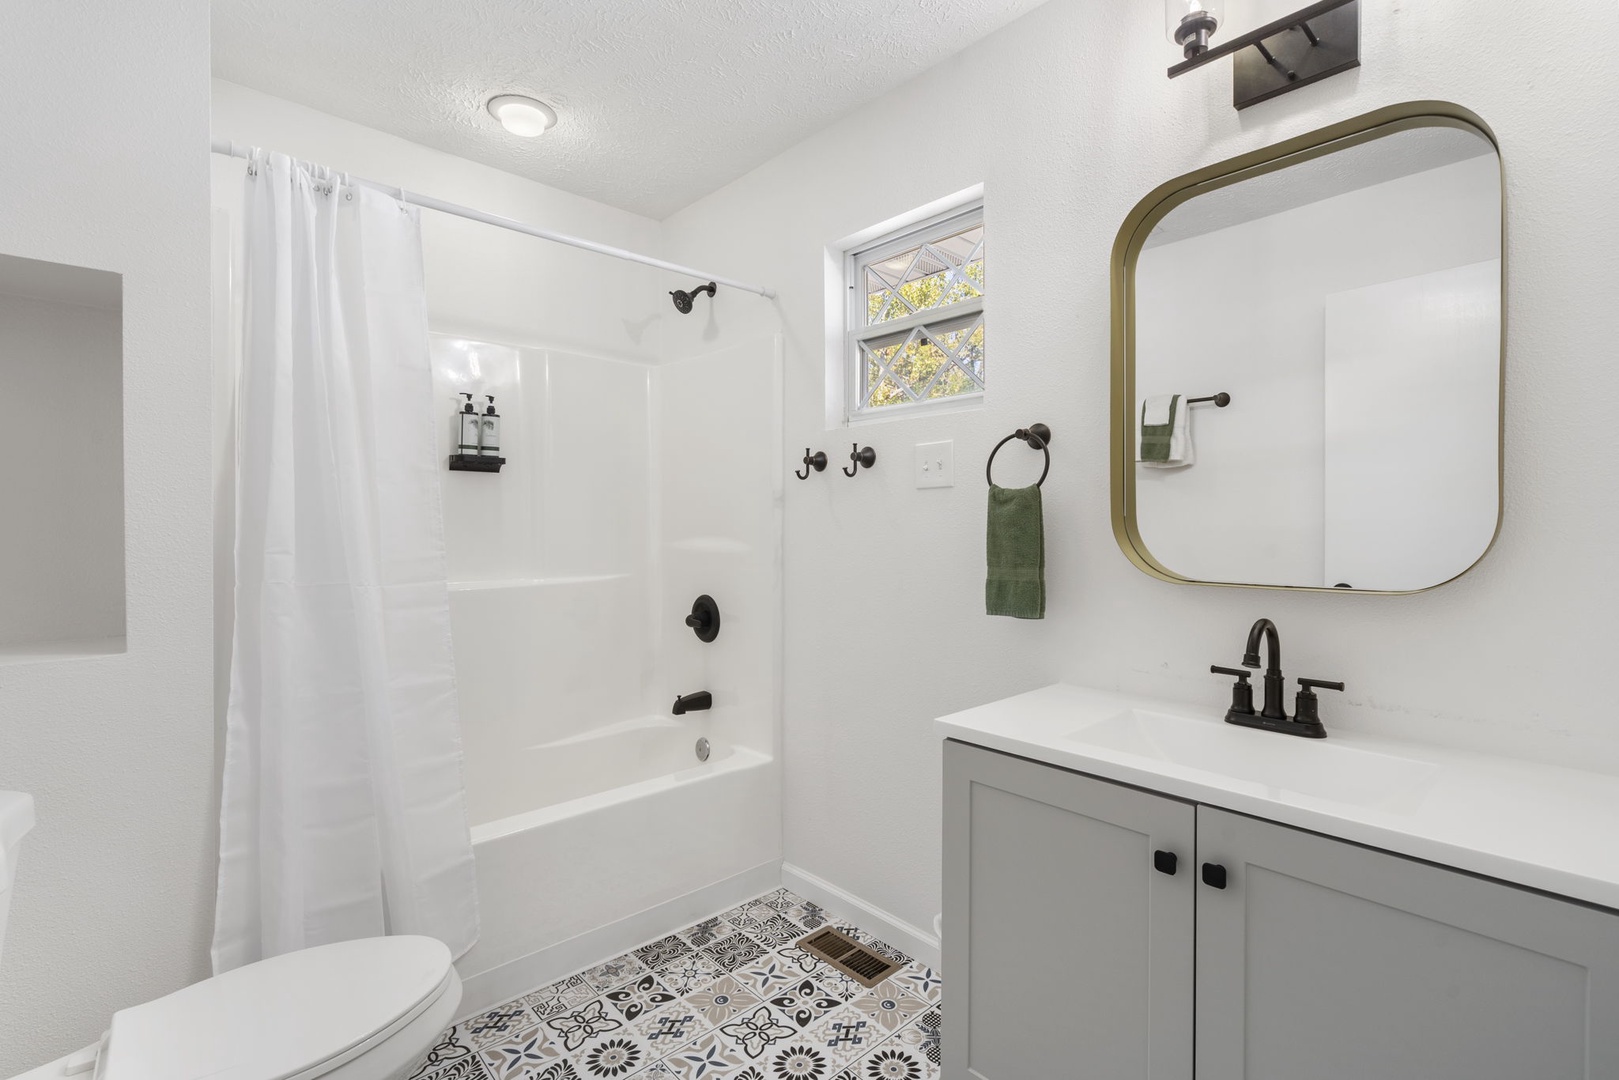 This 2nd floor en suite offers a single vanity & shower/tub combo